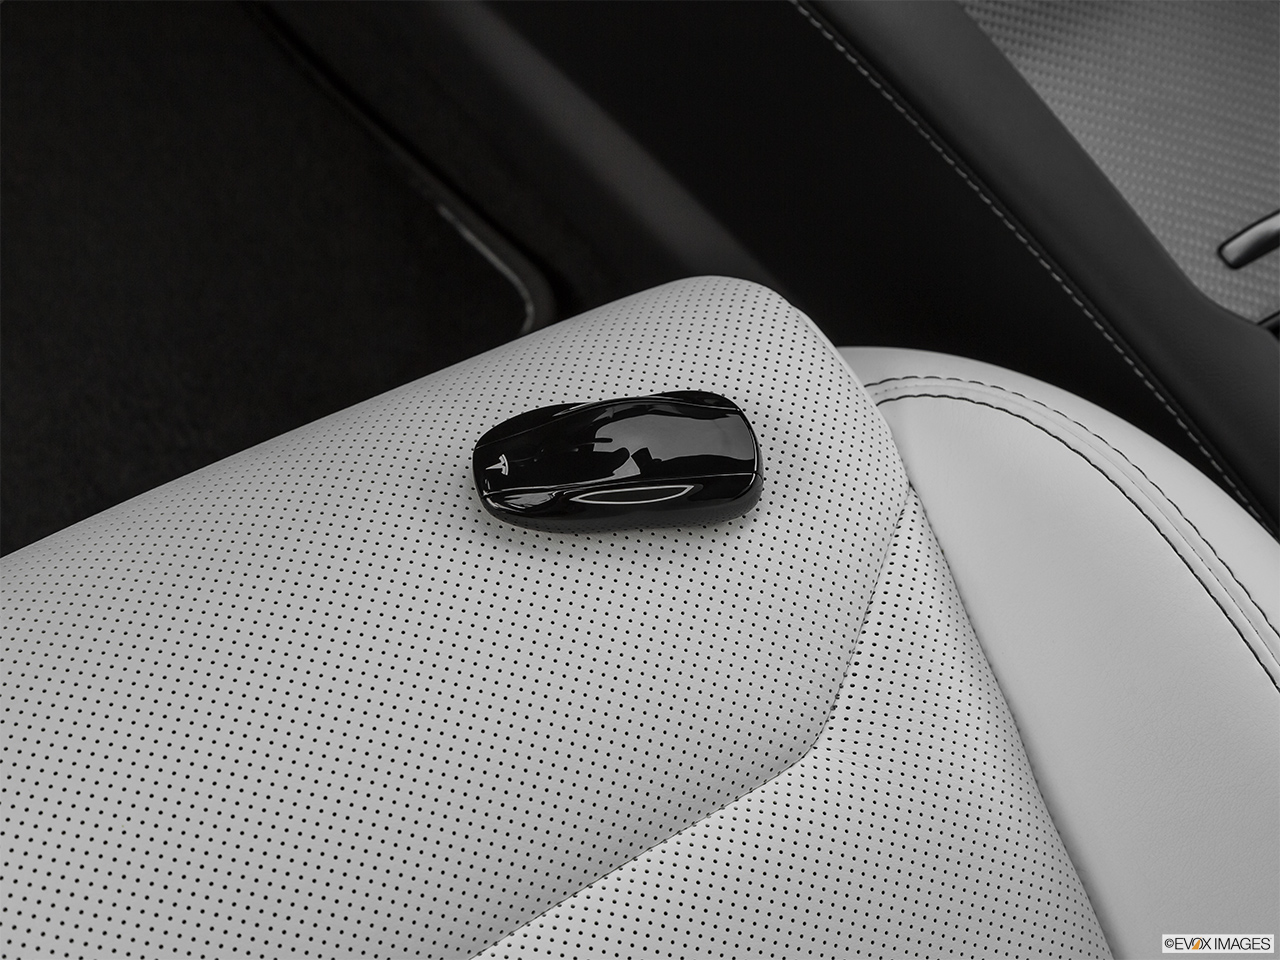 2019 Tesla Model S P100D Key fob on driver's seat. 